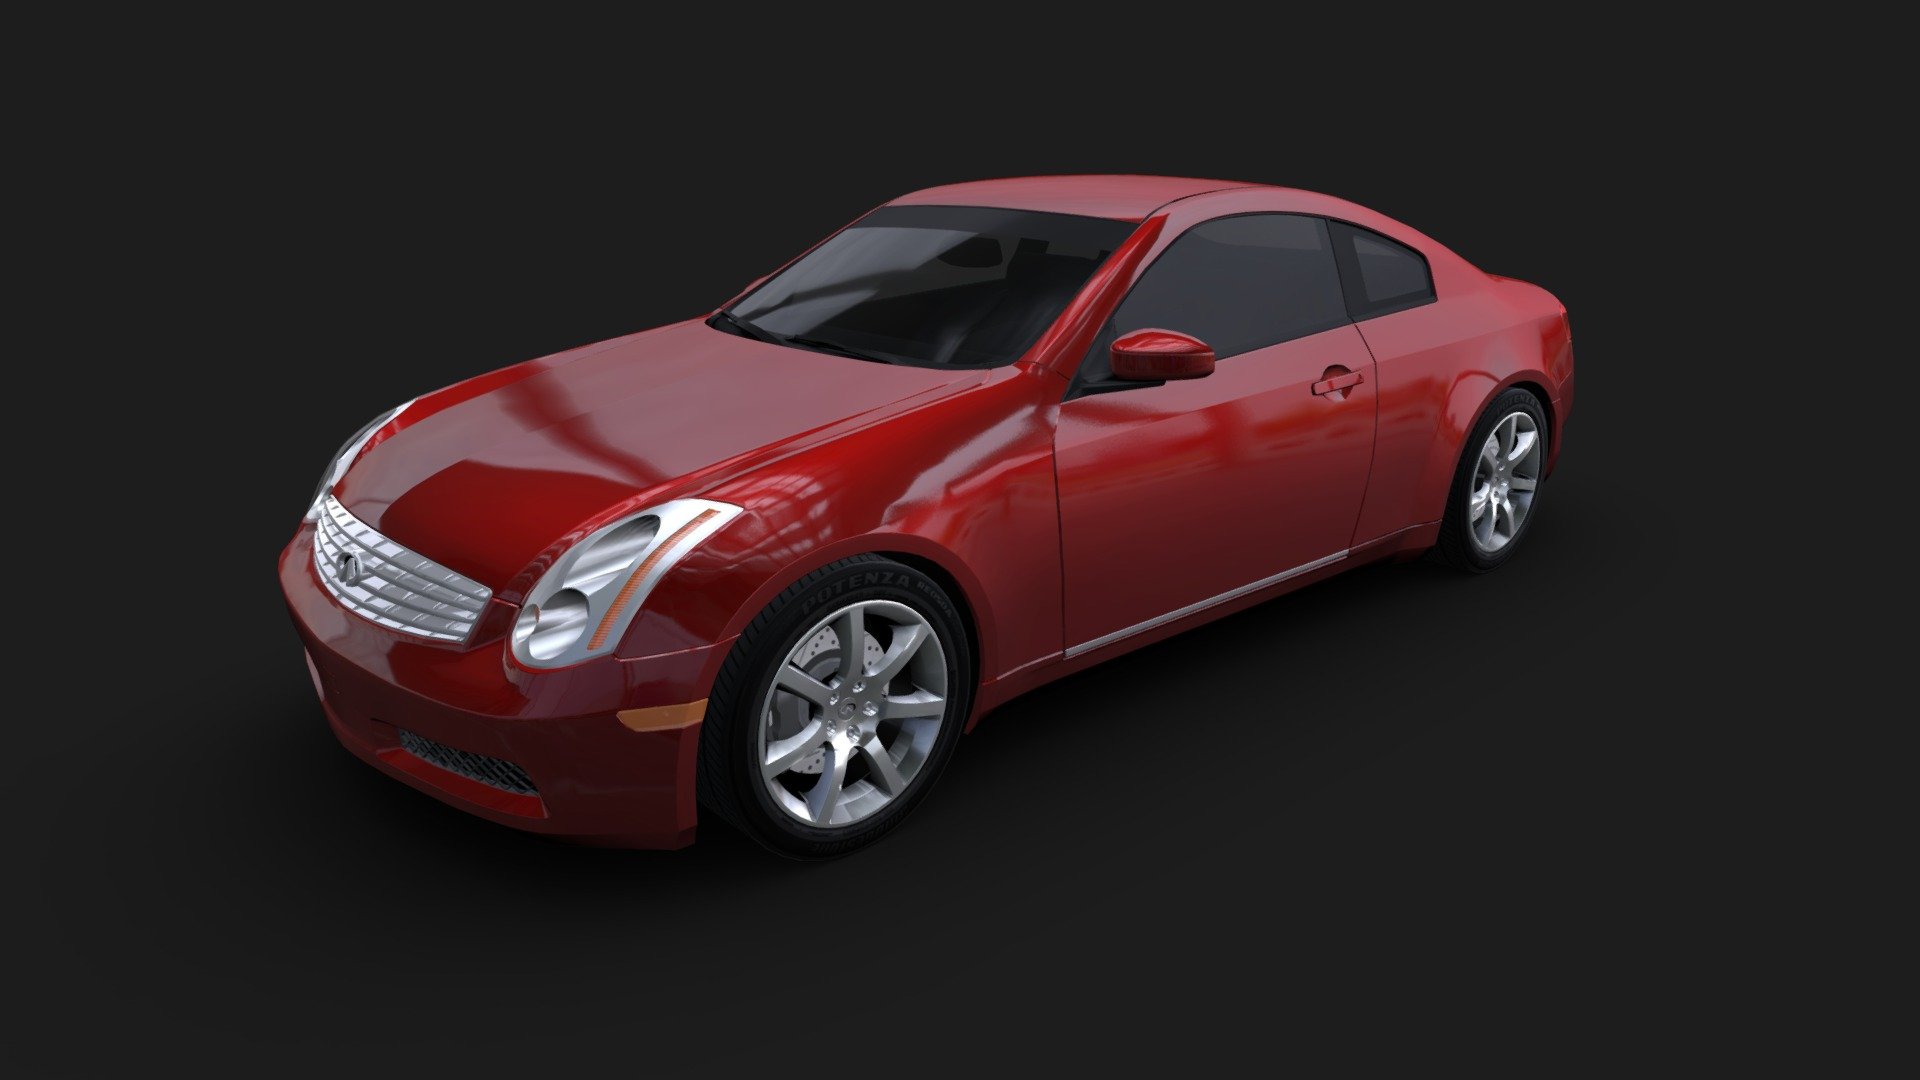 Customer Work. Made for Infiniti Web App

80833 Tris - Infiniti G35 Coupe | Customer Work - 3D model by mk2design 3d model